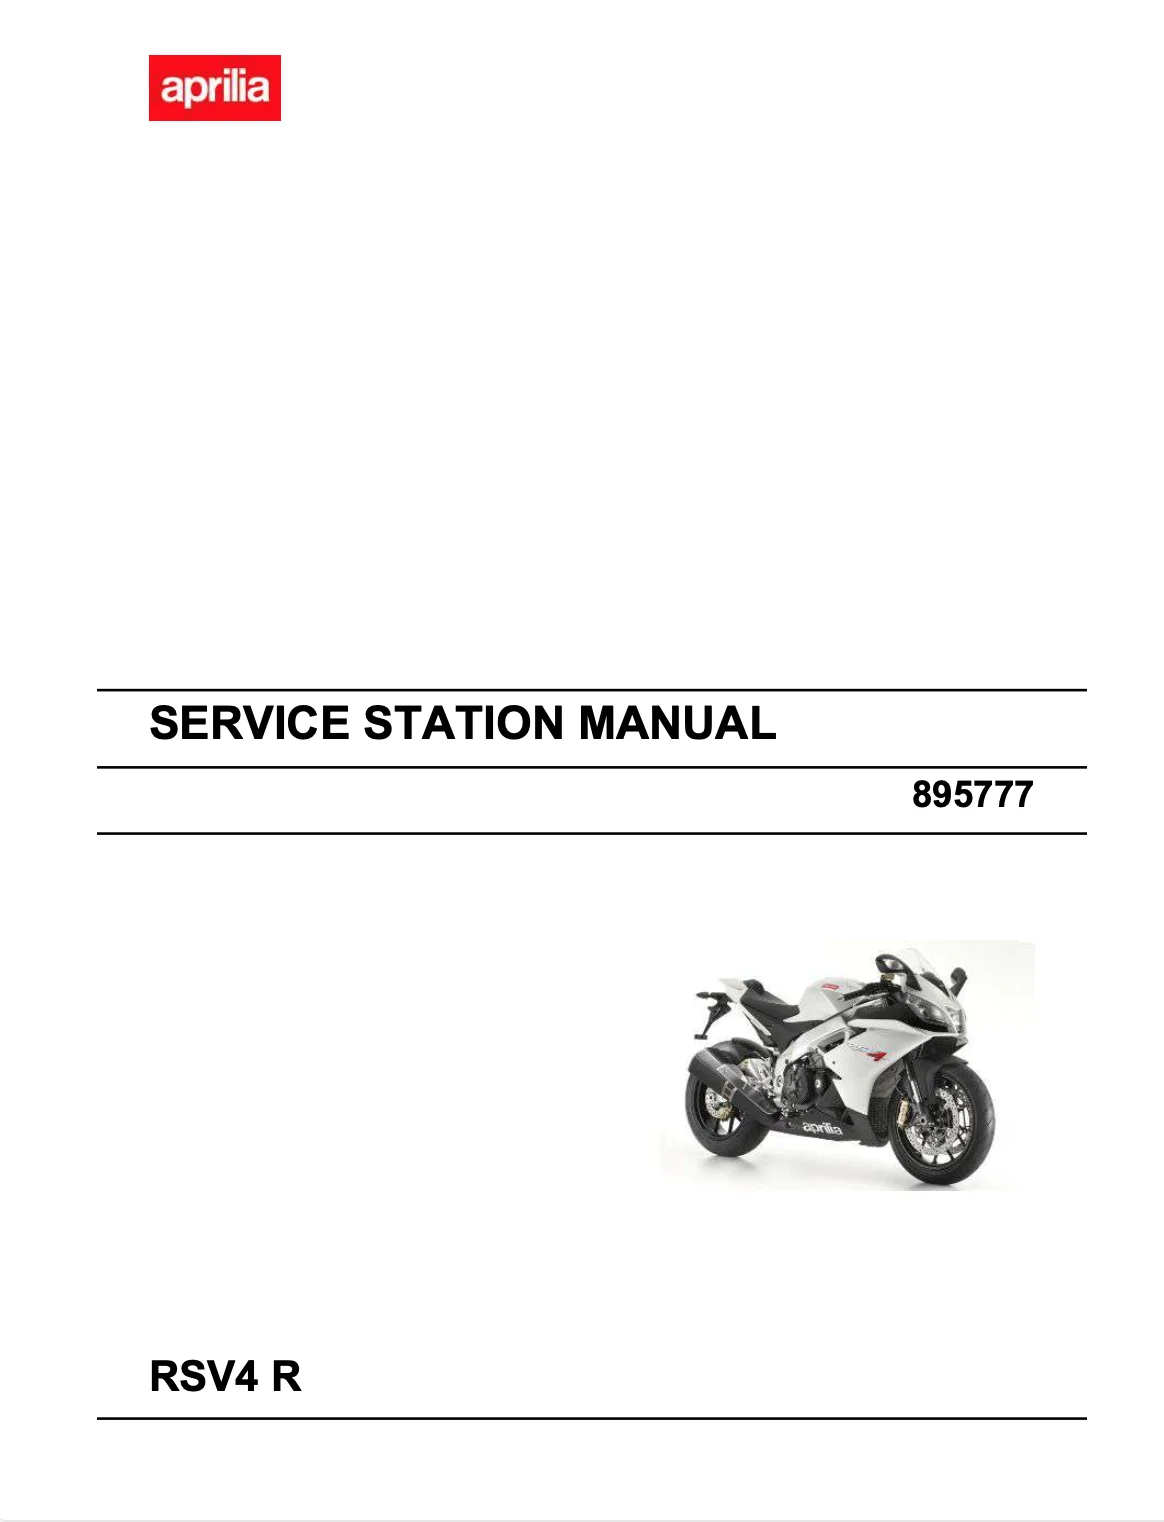 Aprilia RSV4 R models 2005 to 2012 (1st Gen.) original motorcycle manufacturer's PDF repair manual download